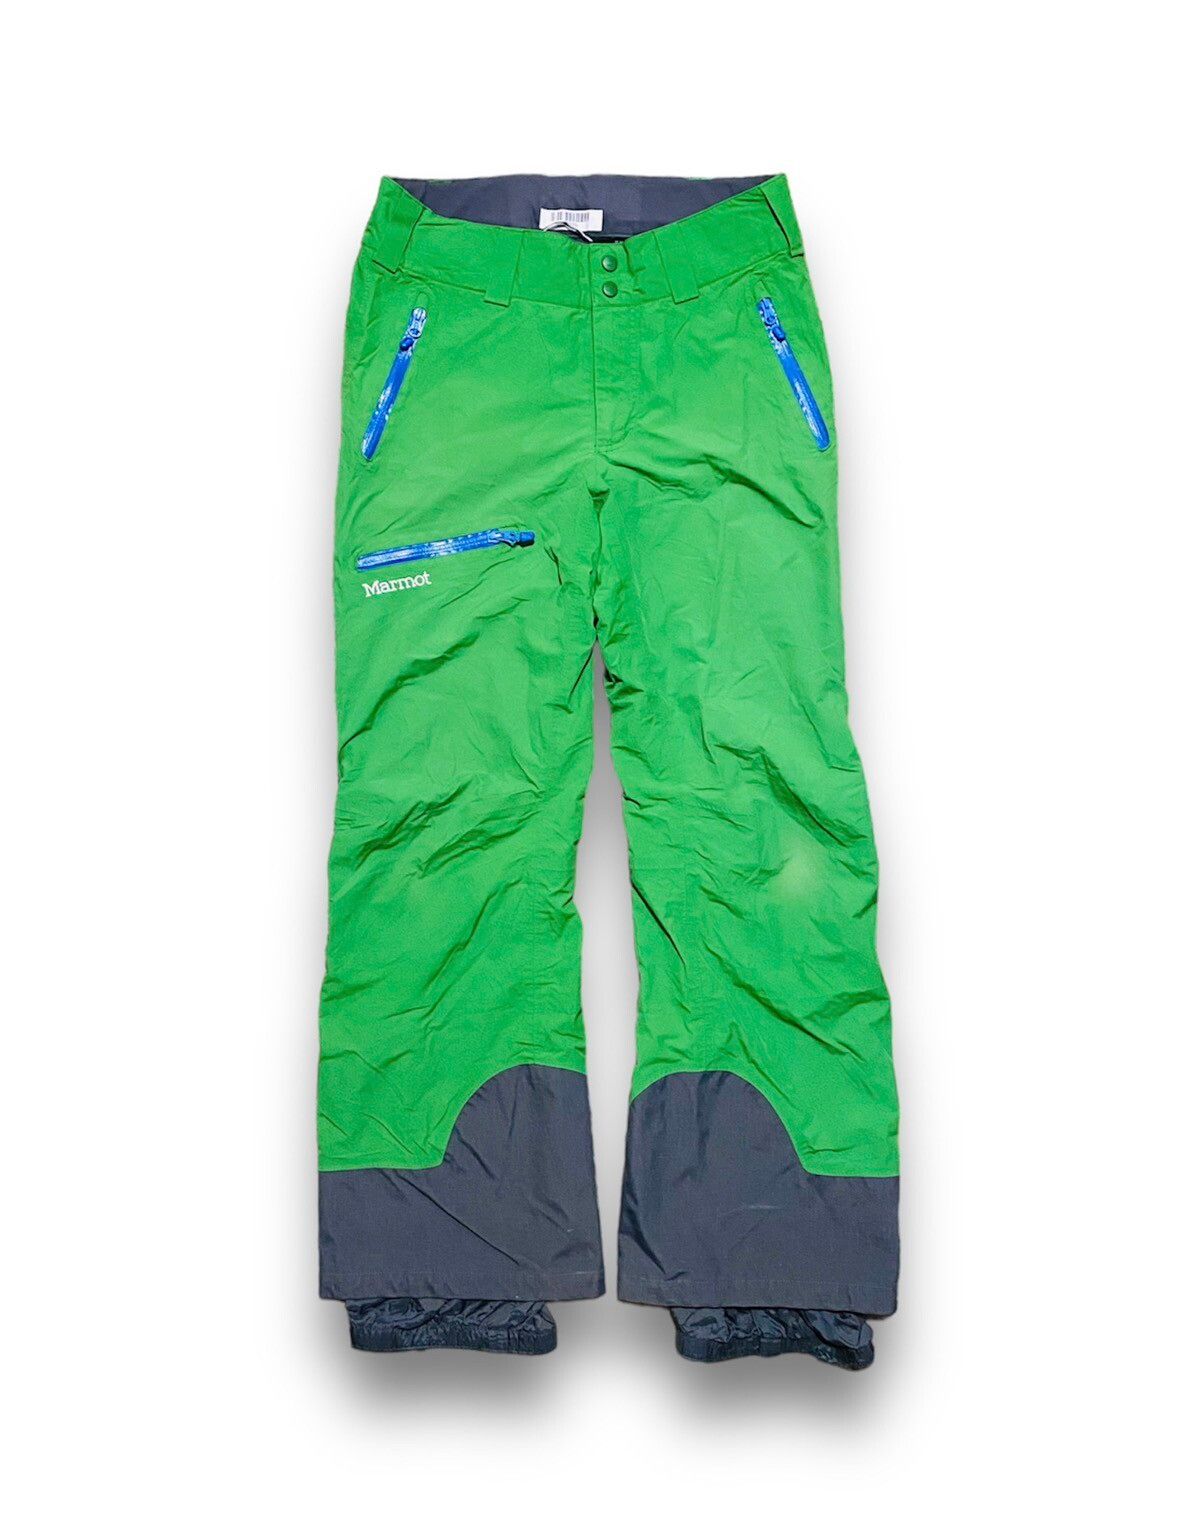 Marmot GTX Pants Trousers Skiing Hiking Outdoor Green Men M - 1